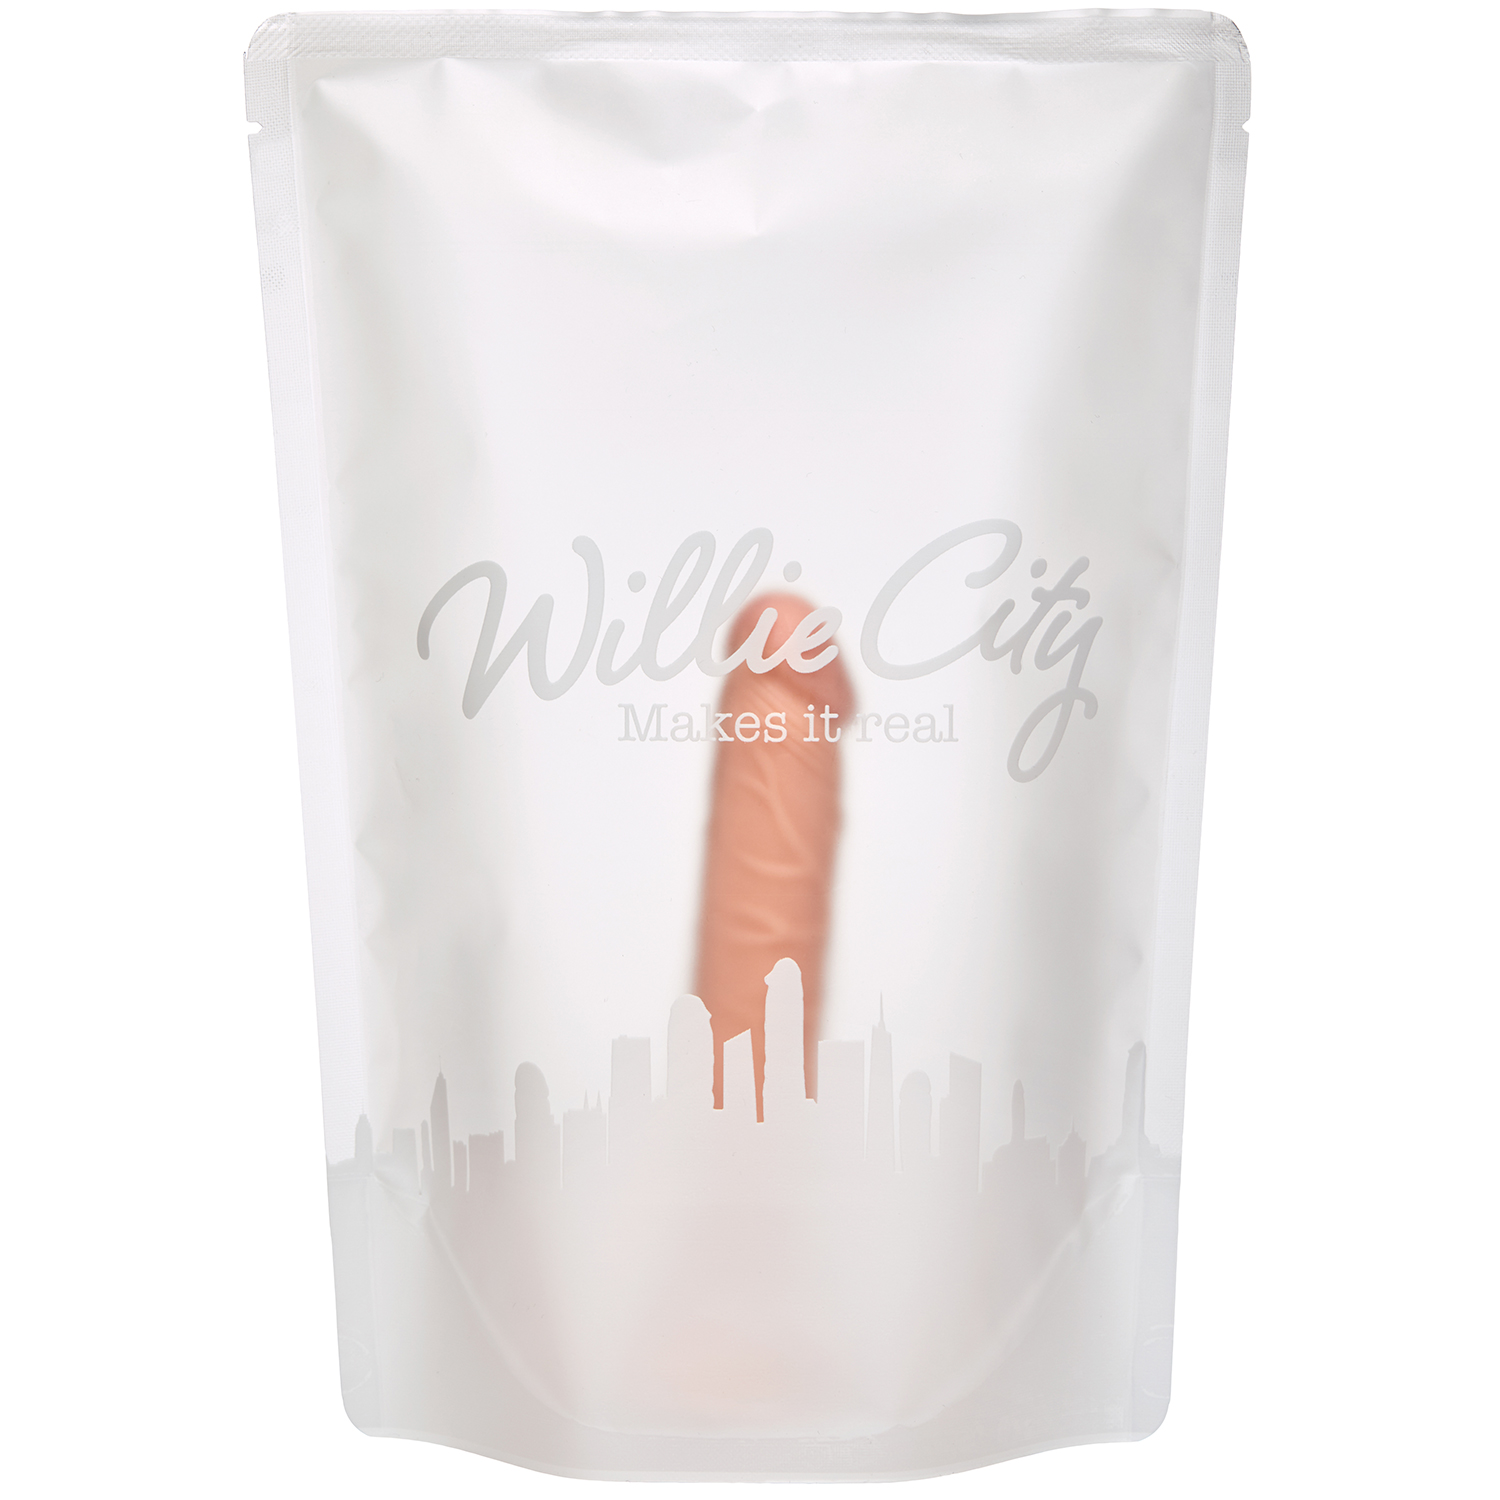 Willie City Realistisk Dildo med Sugekop 14,5 cm    - Nude